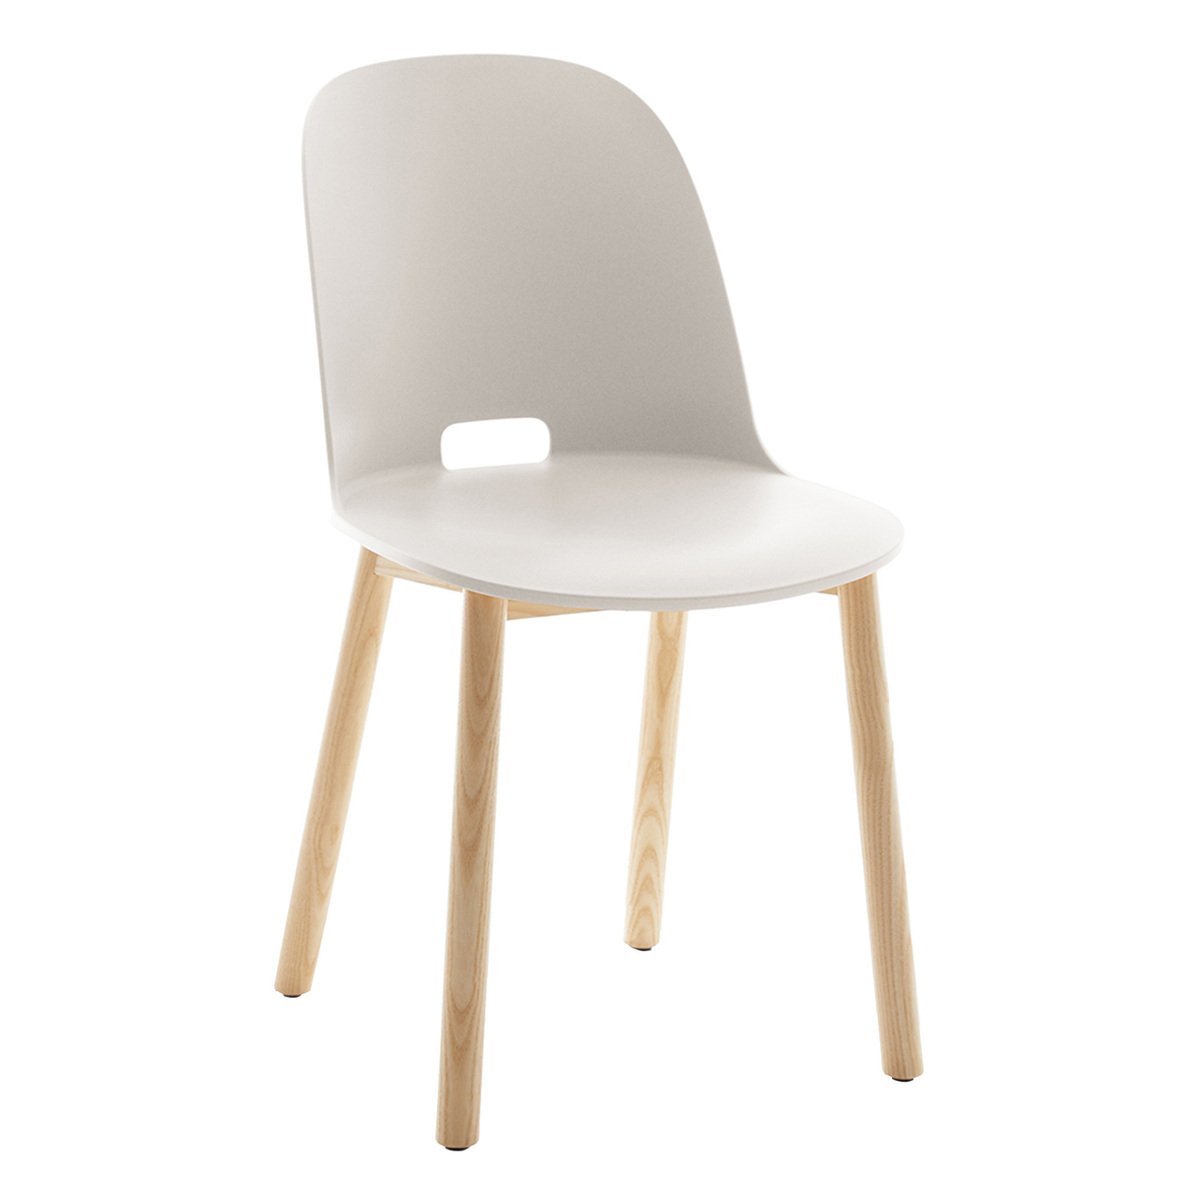 Emeco Alfi Chair High Back White Seat, White Chair Wooden Legs Ikea